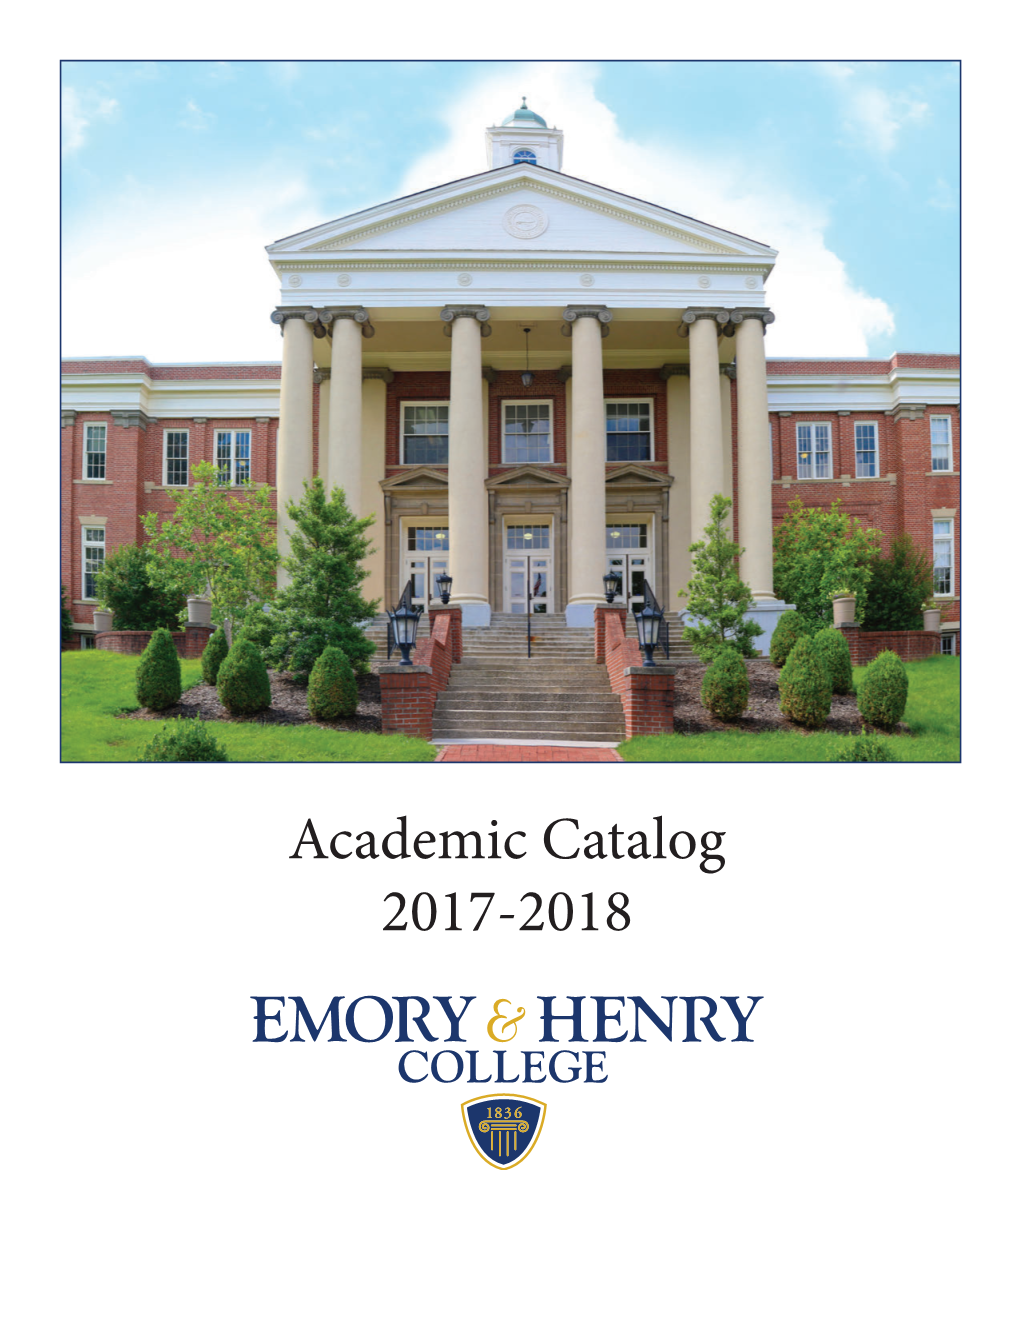 Academic Catalog 2017-2018 MISSION STATEMENT OF